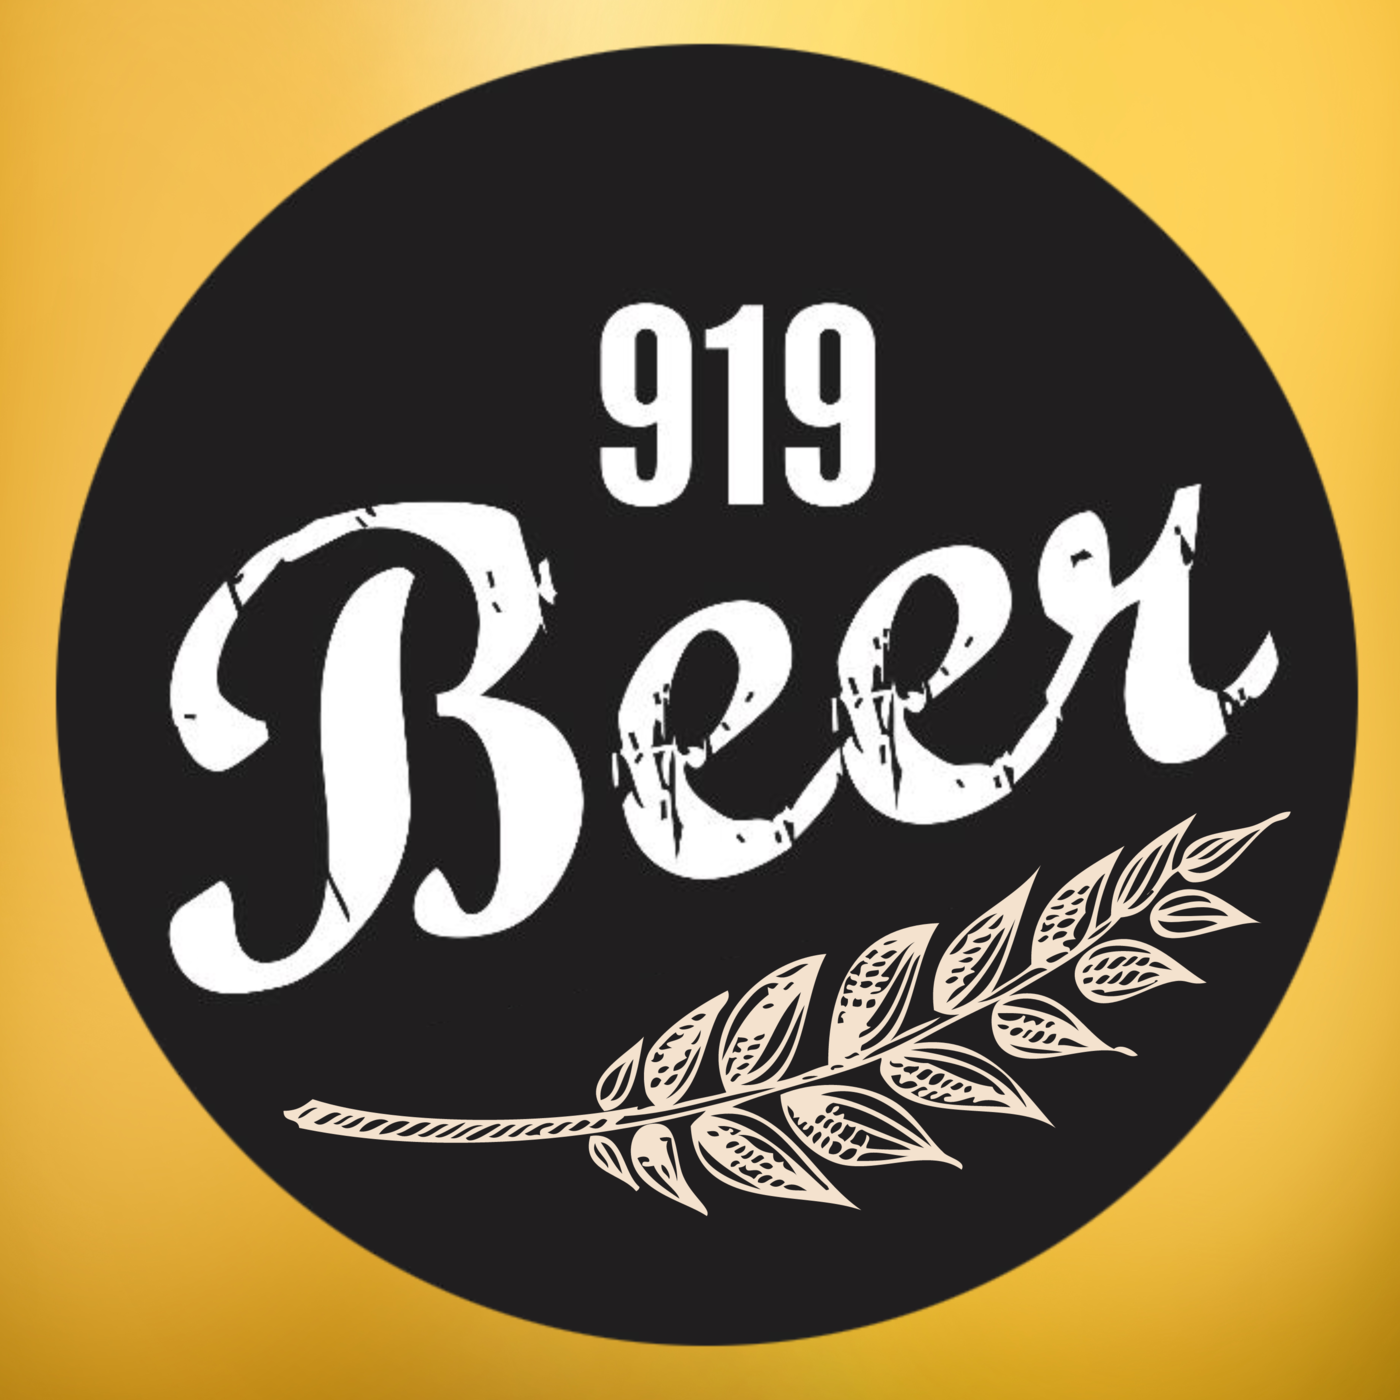 2022 recap of North Carolina Beer trends